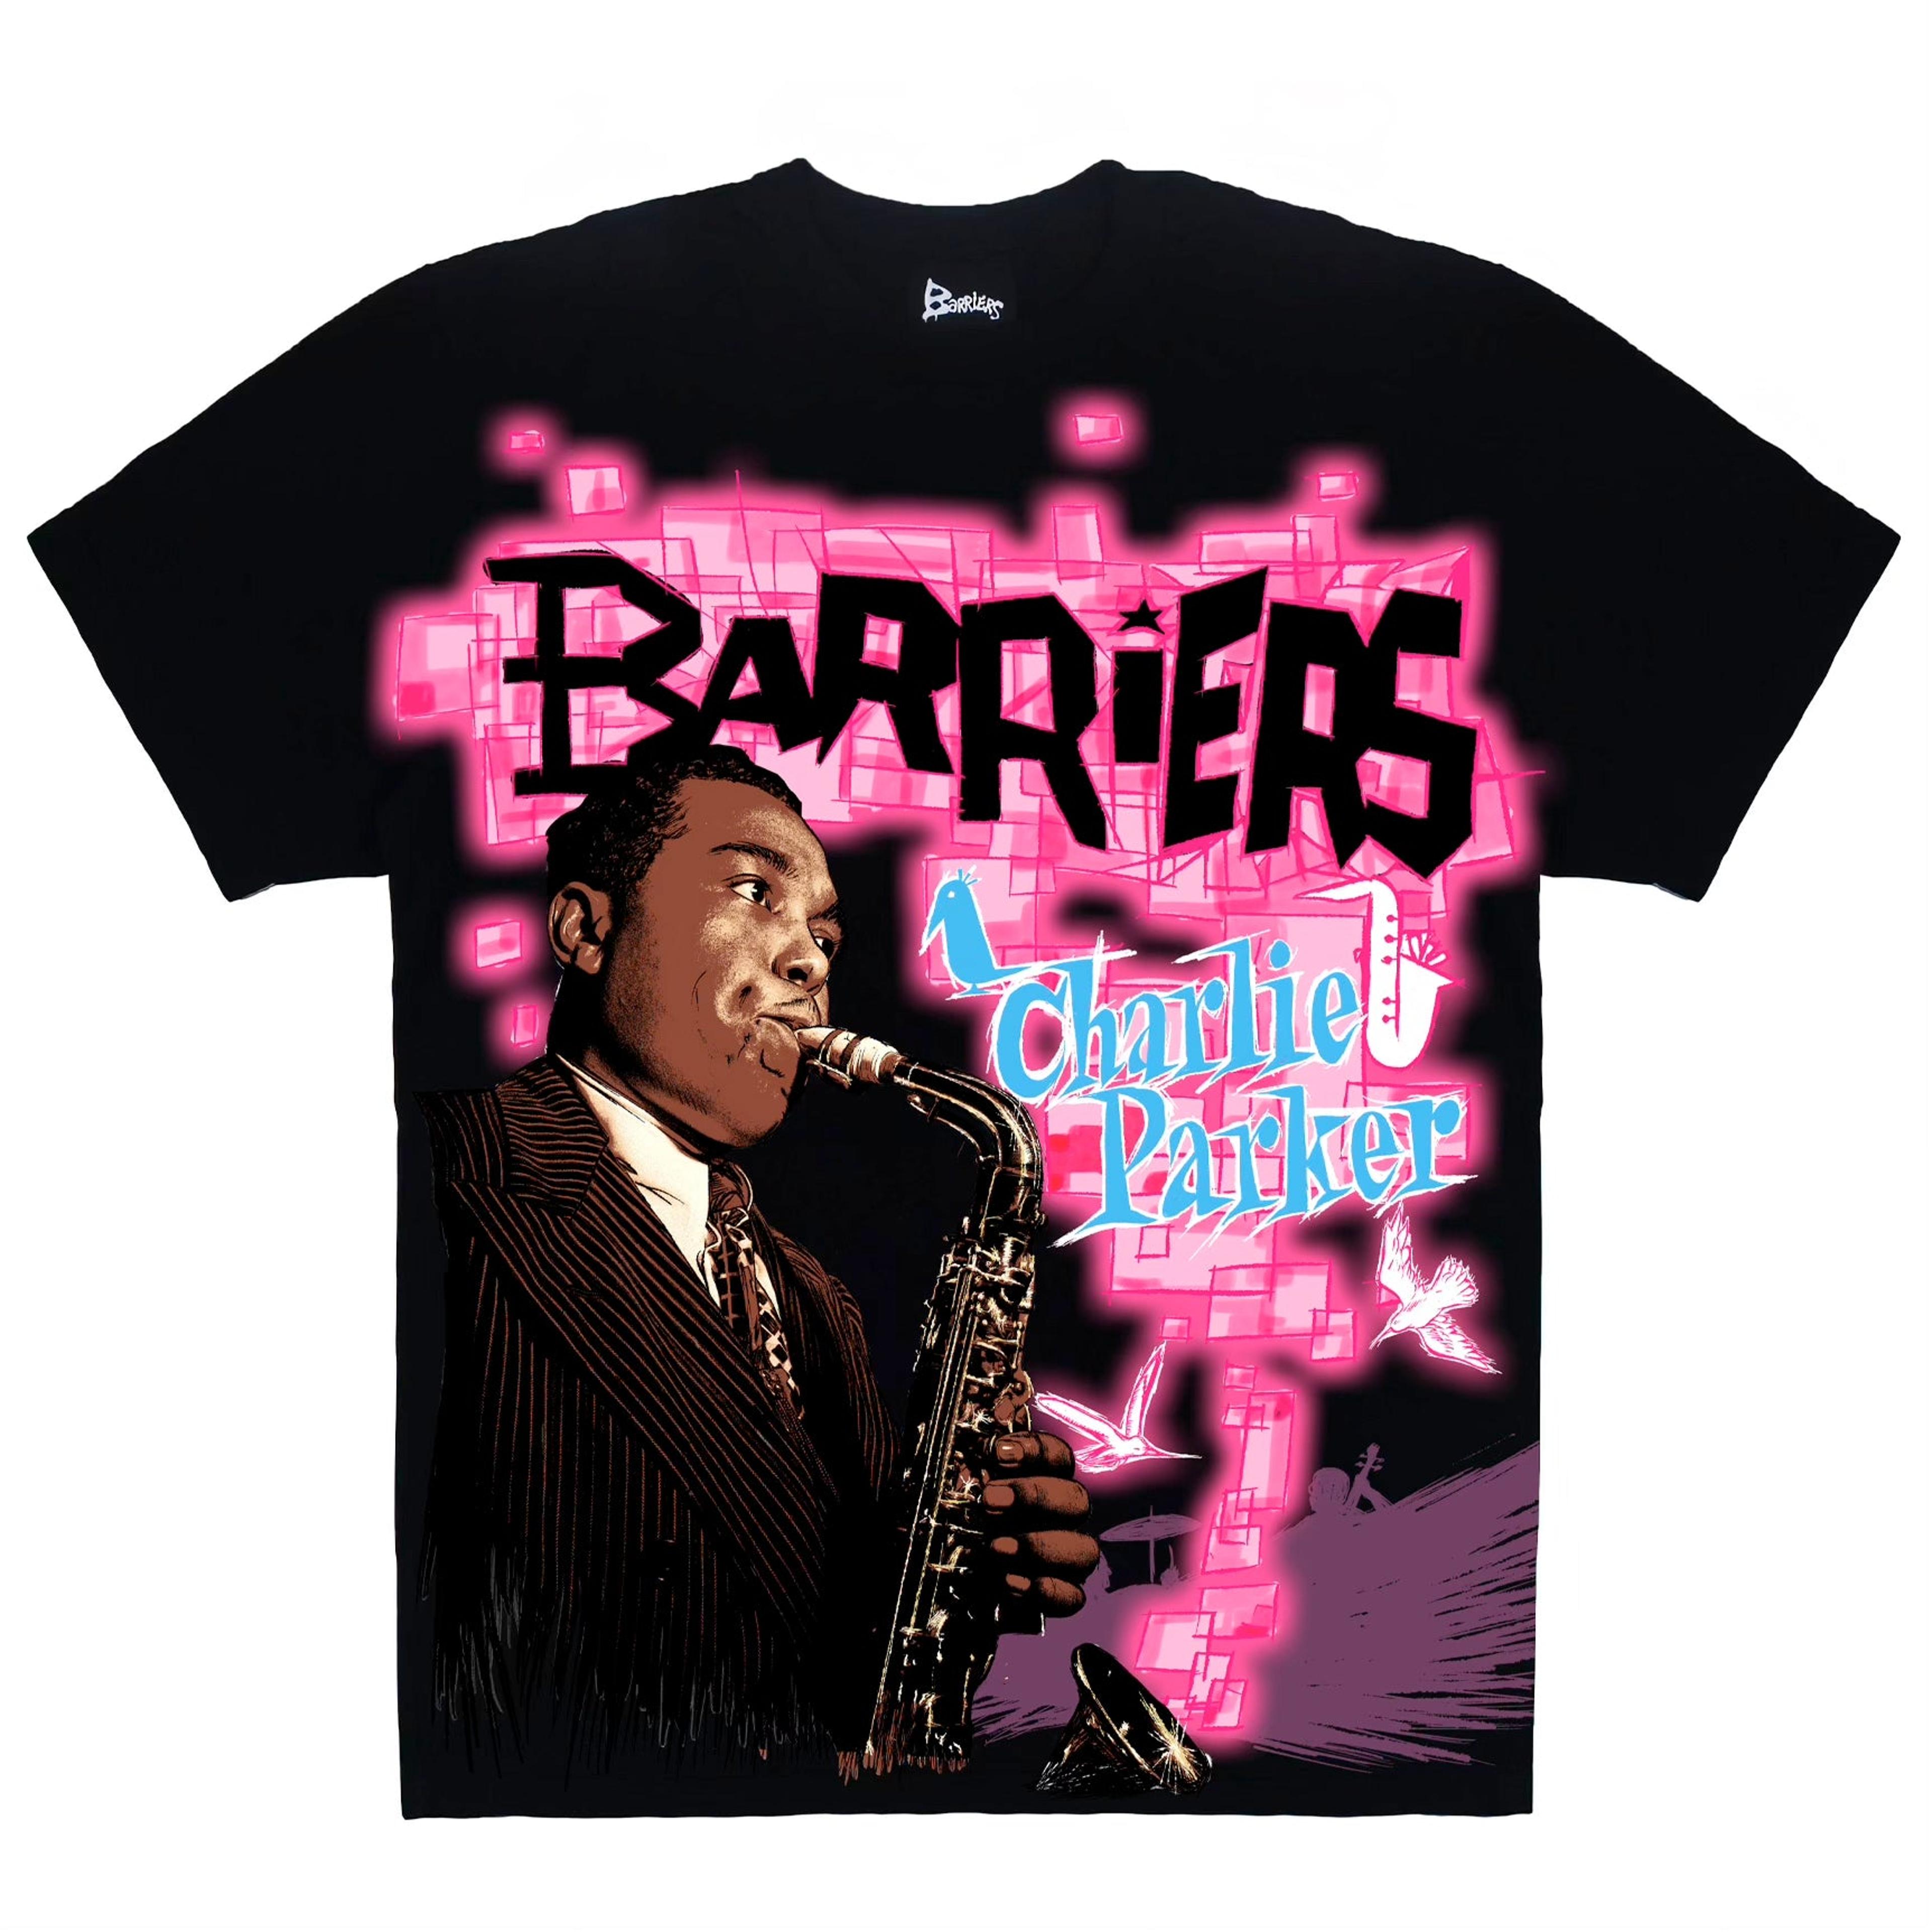 Barriers "Charlie Parker" T-Shirt